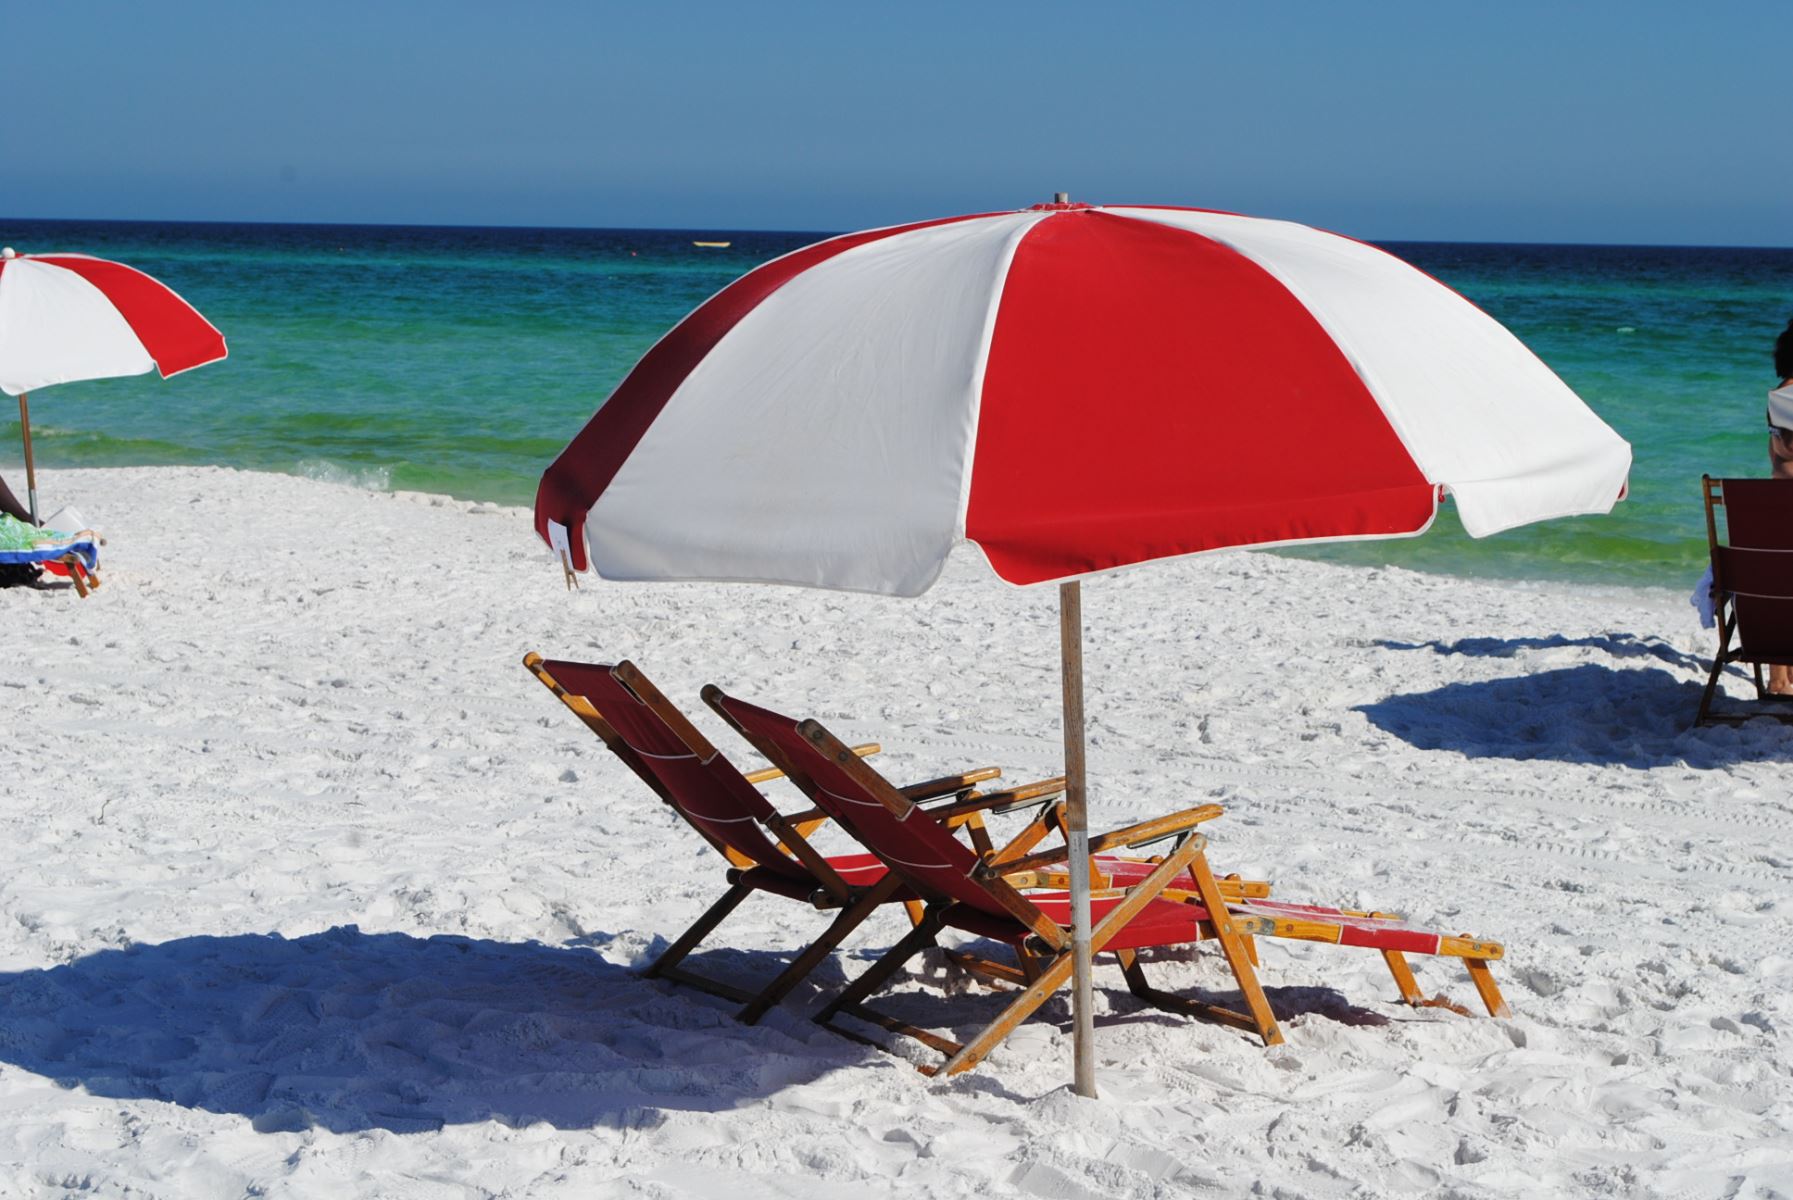 Enjoy Free Beach Service While at Ciboney. Umbrella and 2 Chairs Set-up Waiting forYou